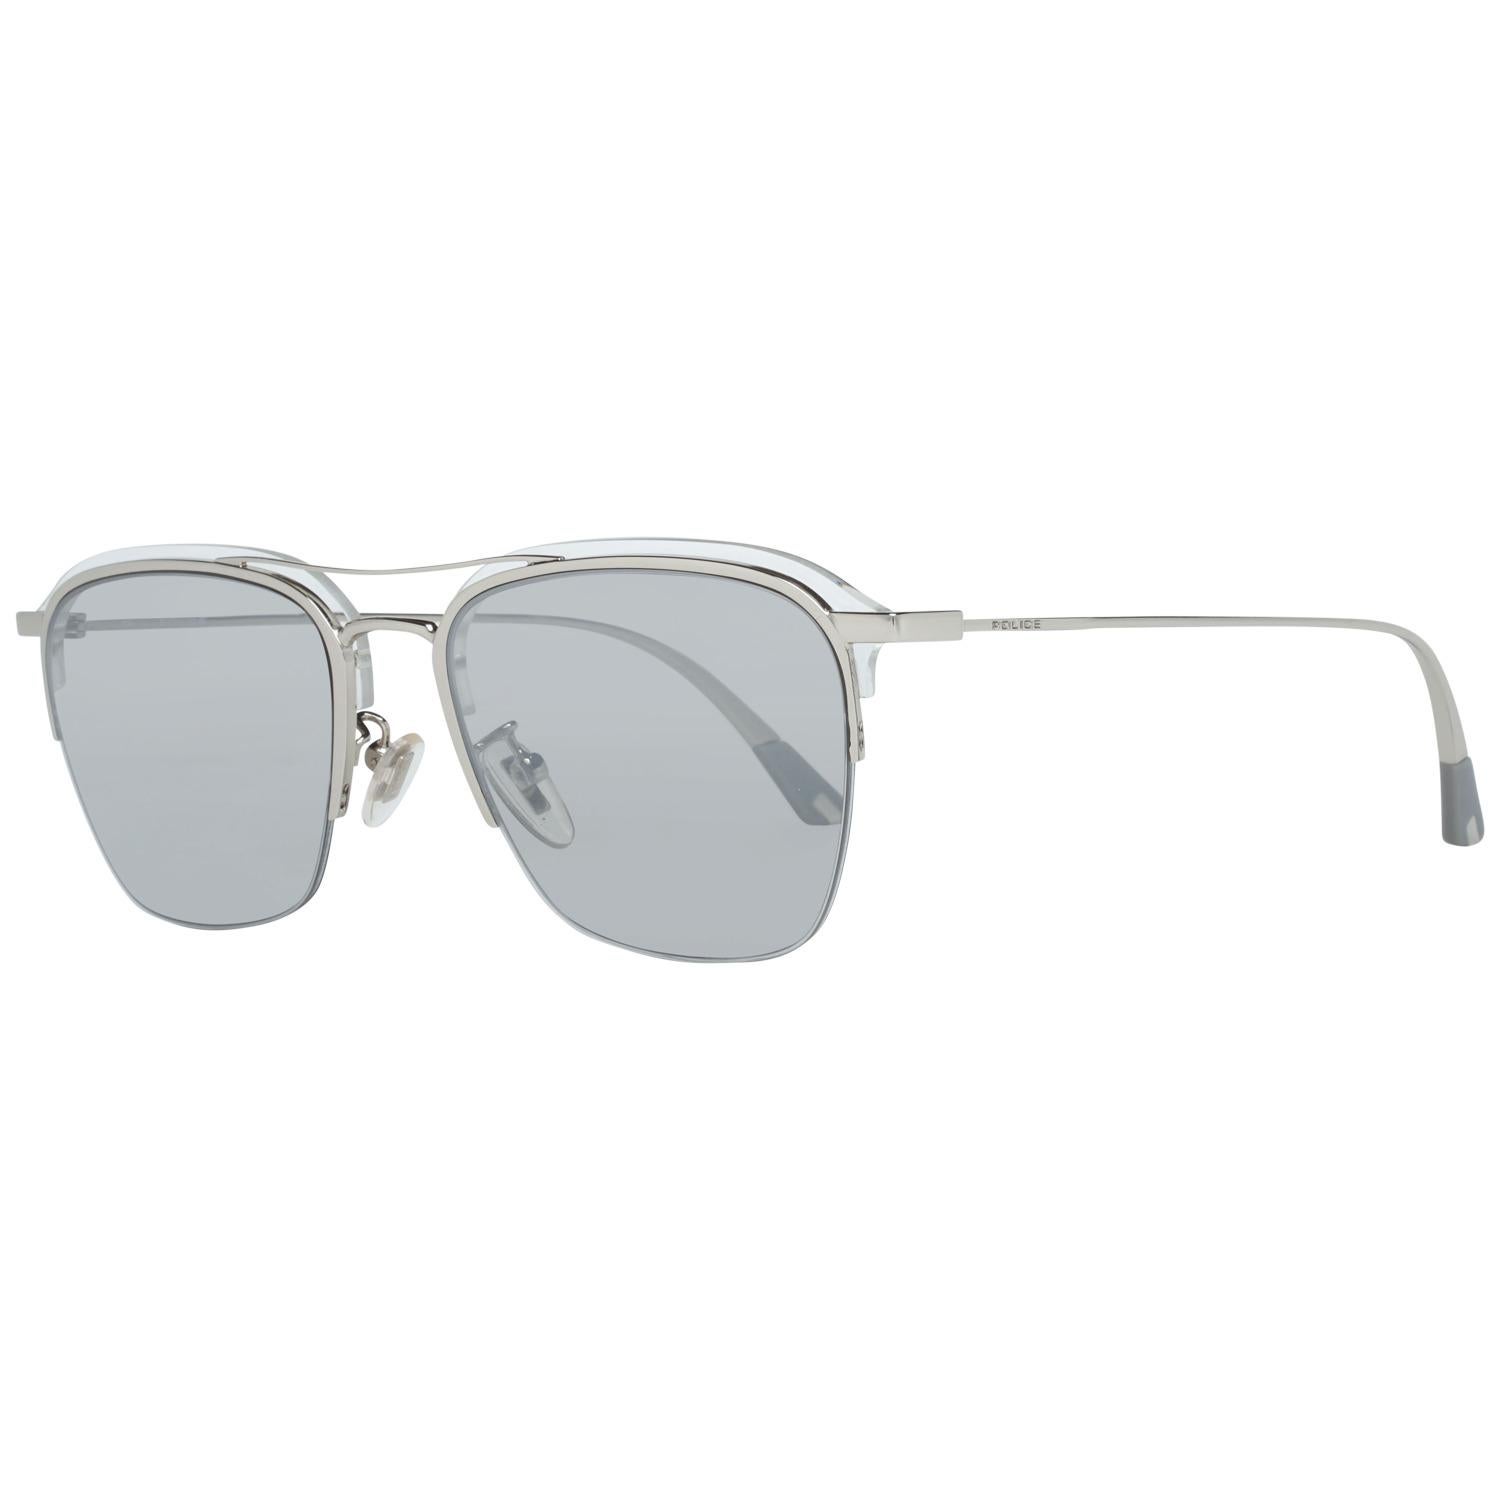 Police Mint Unisex Silver Sunglasses SPL783 54579X 54-18-140 mm 1